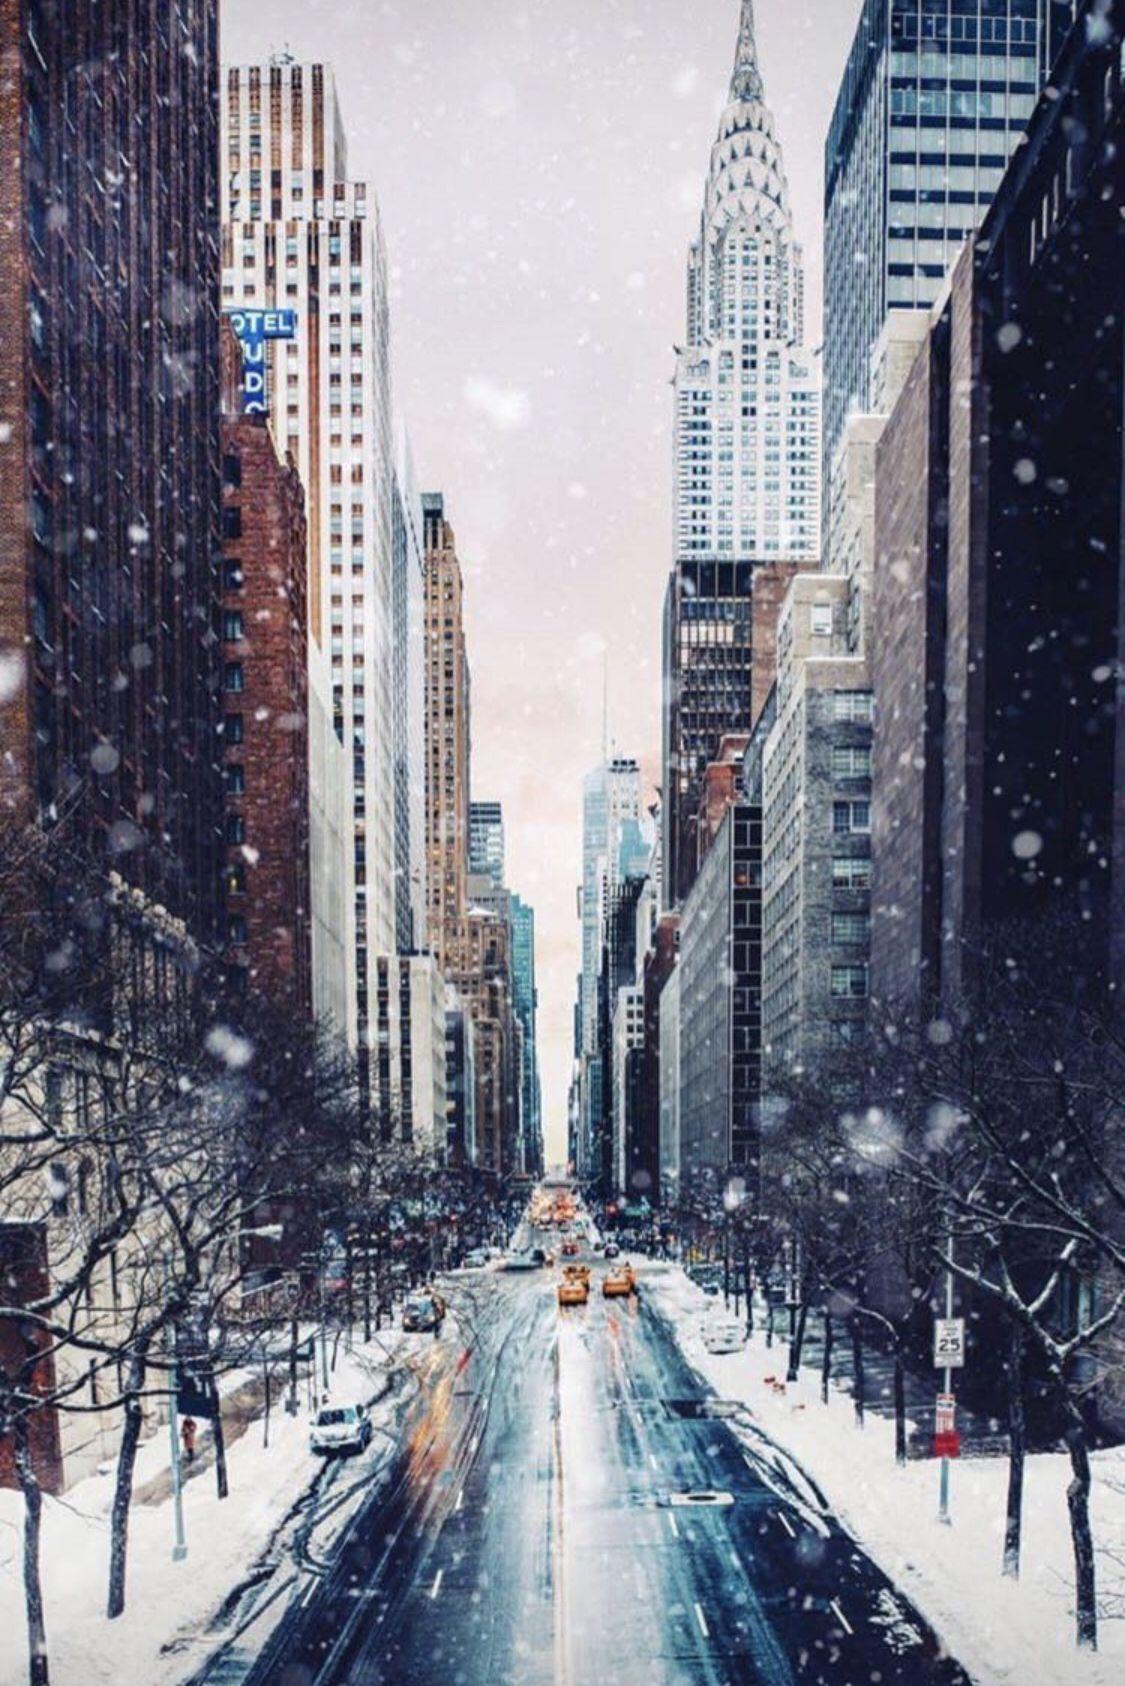 snow city wallpaper